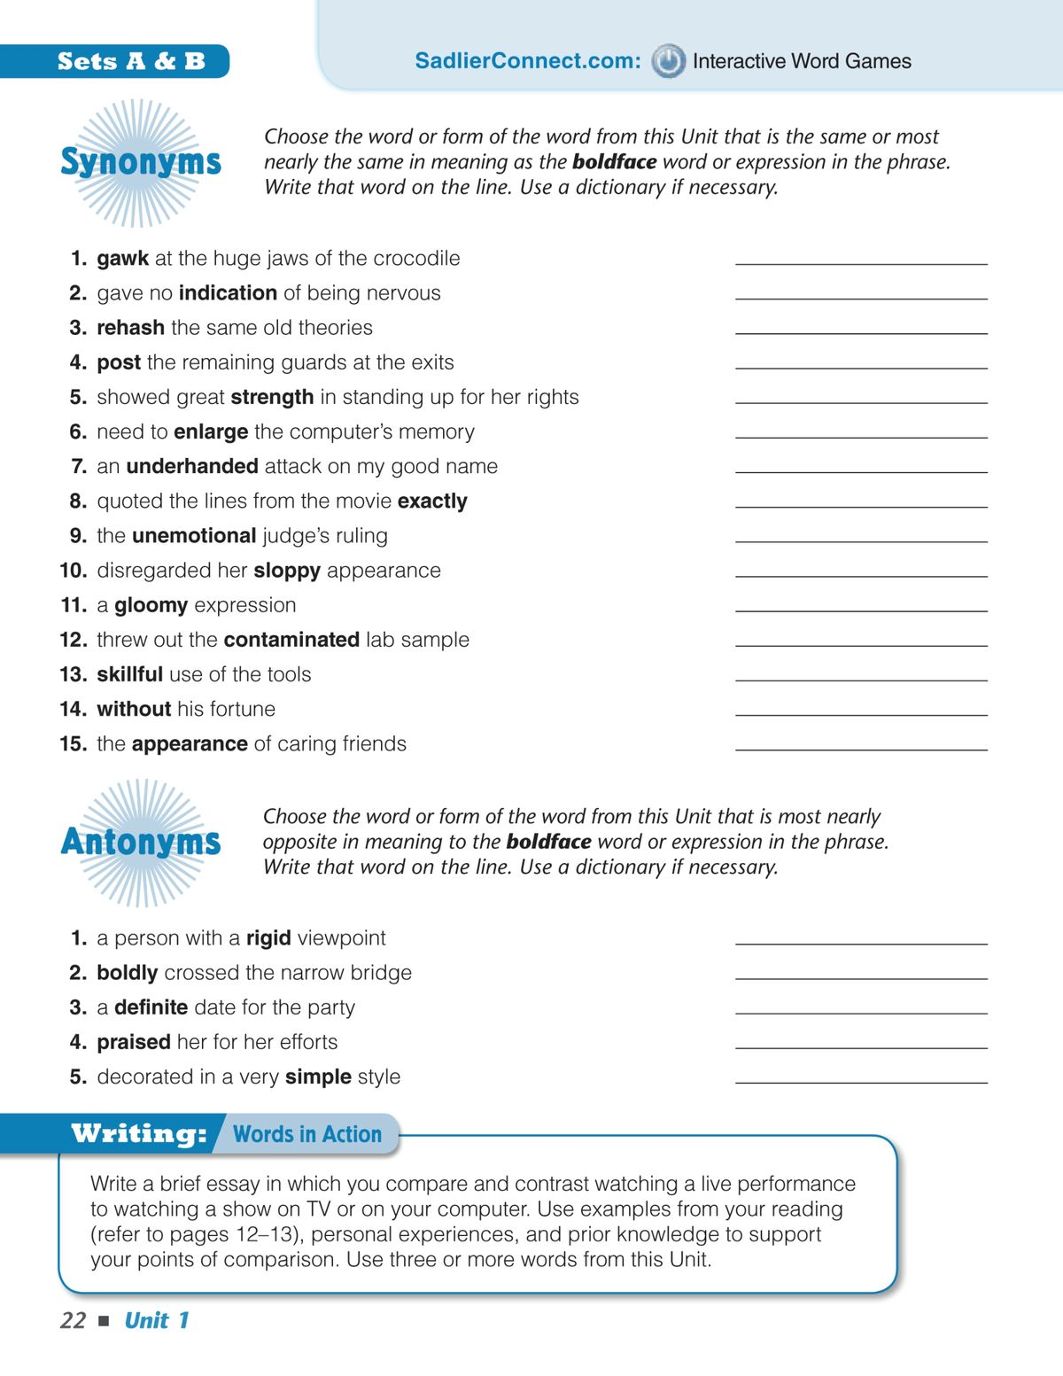 sadlier vocabulary workshop level e answers unit 5 synonyms and antonyms